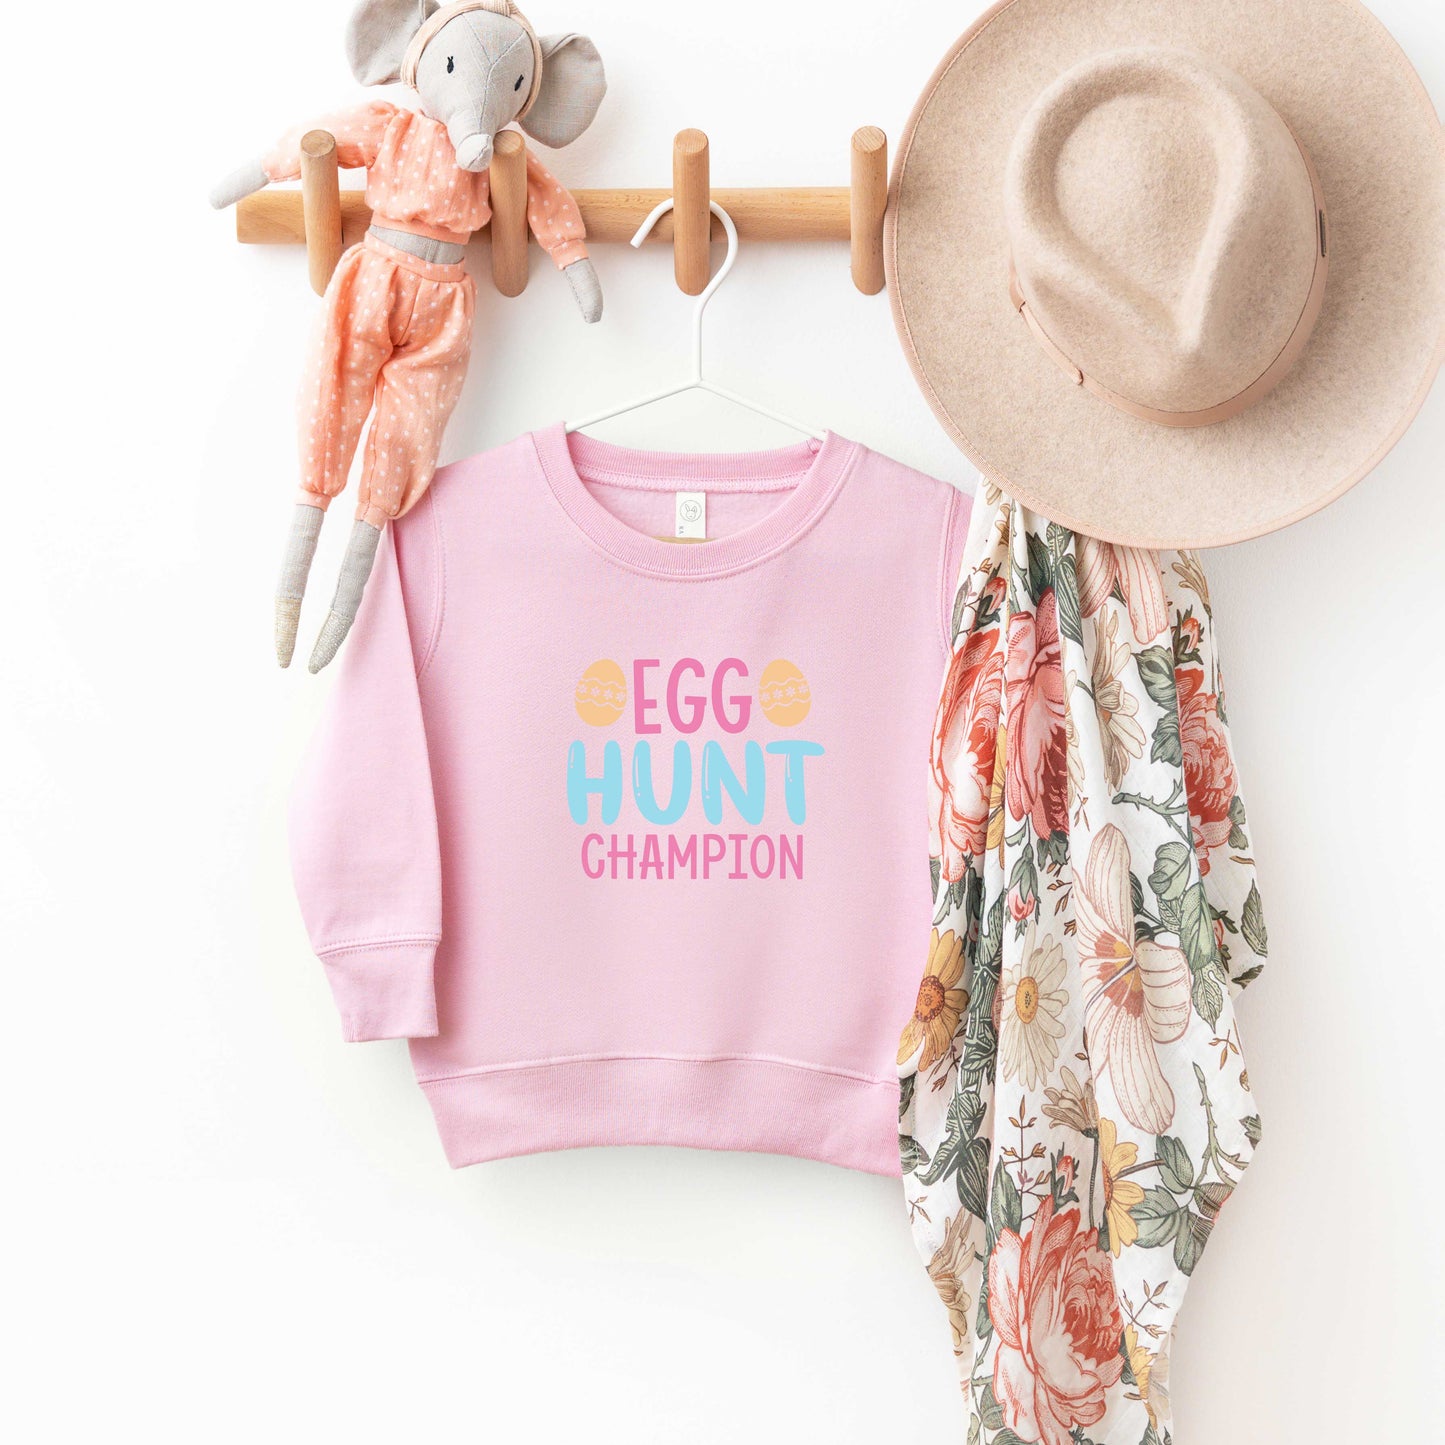 Egg Hunt Champion | Toddler Sweatshirt